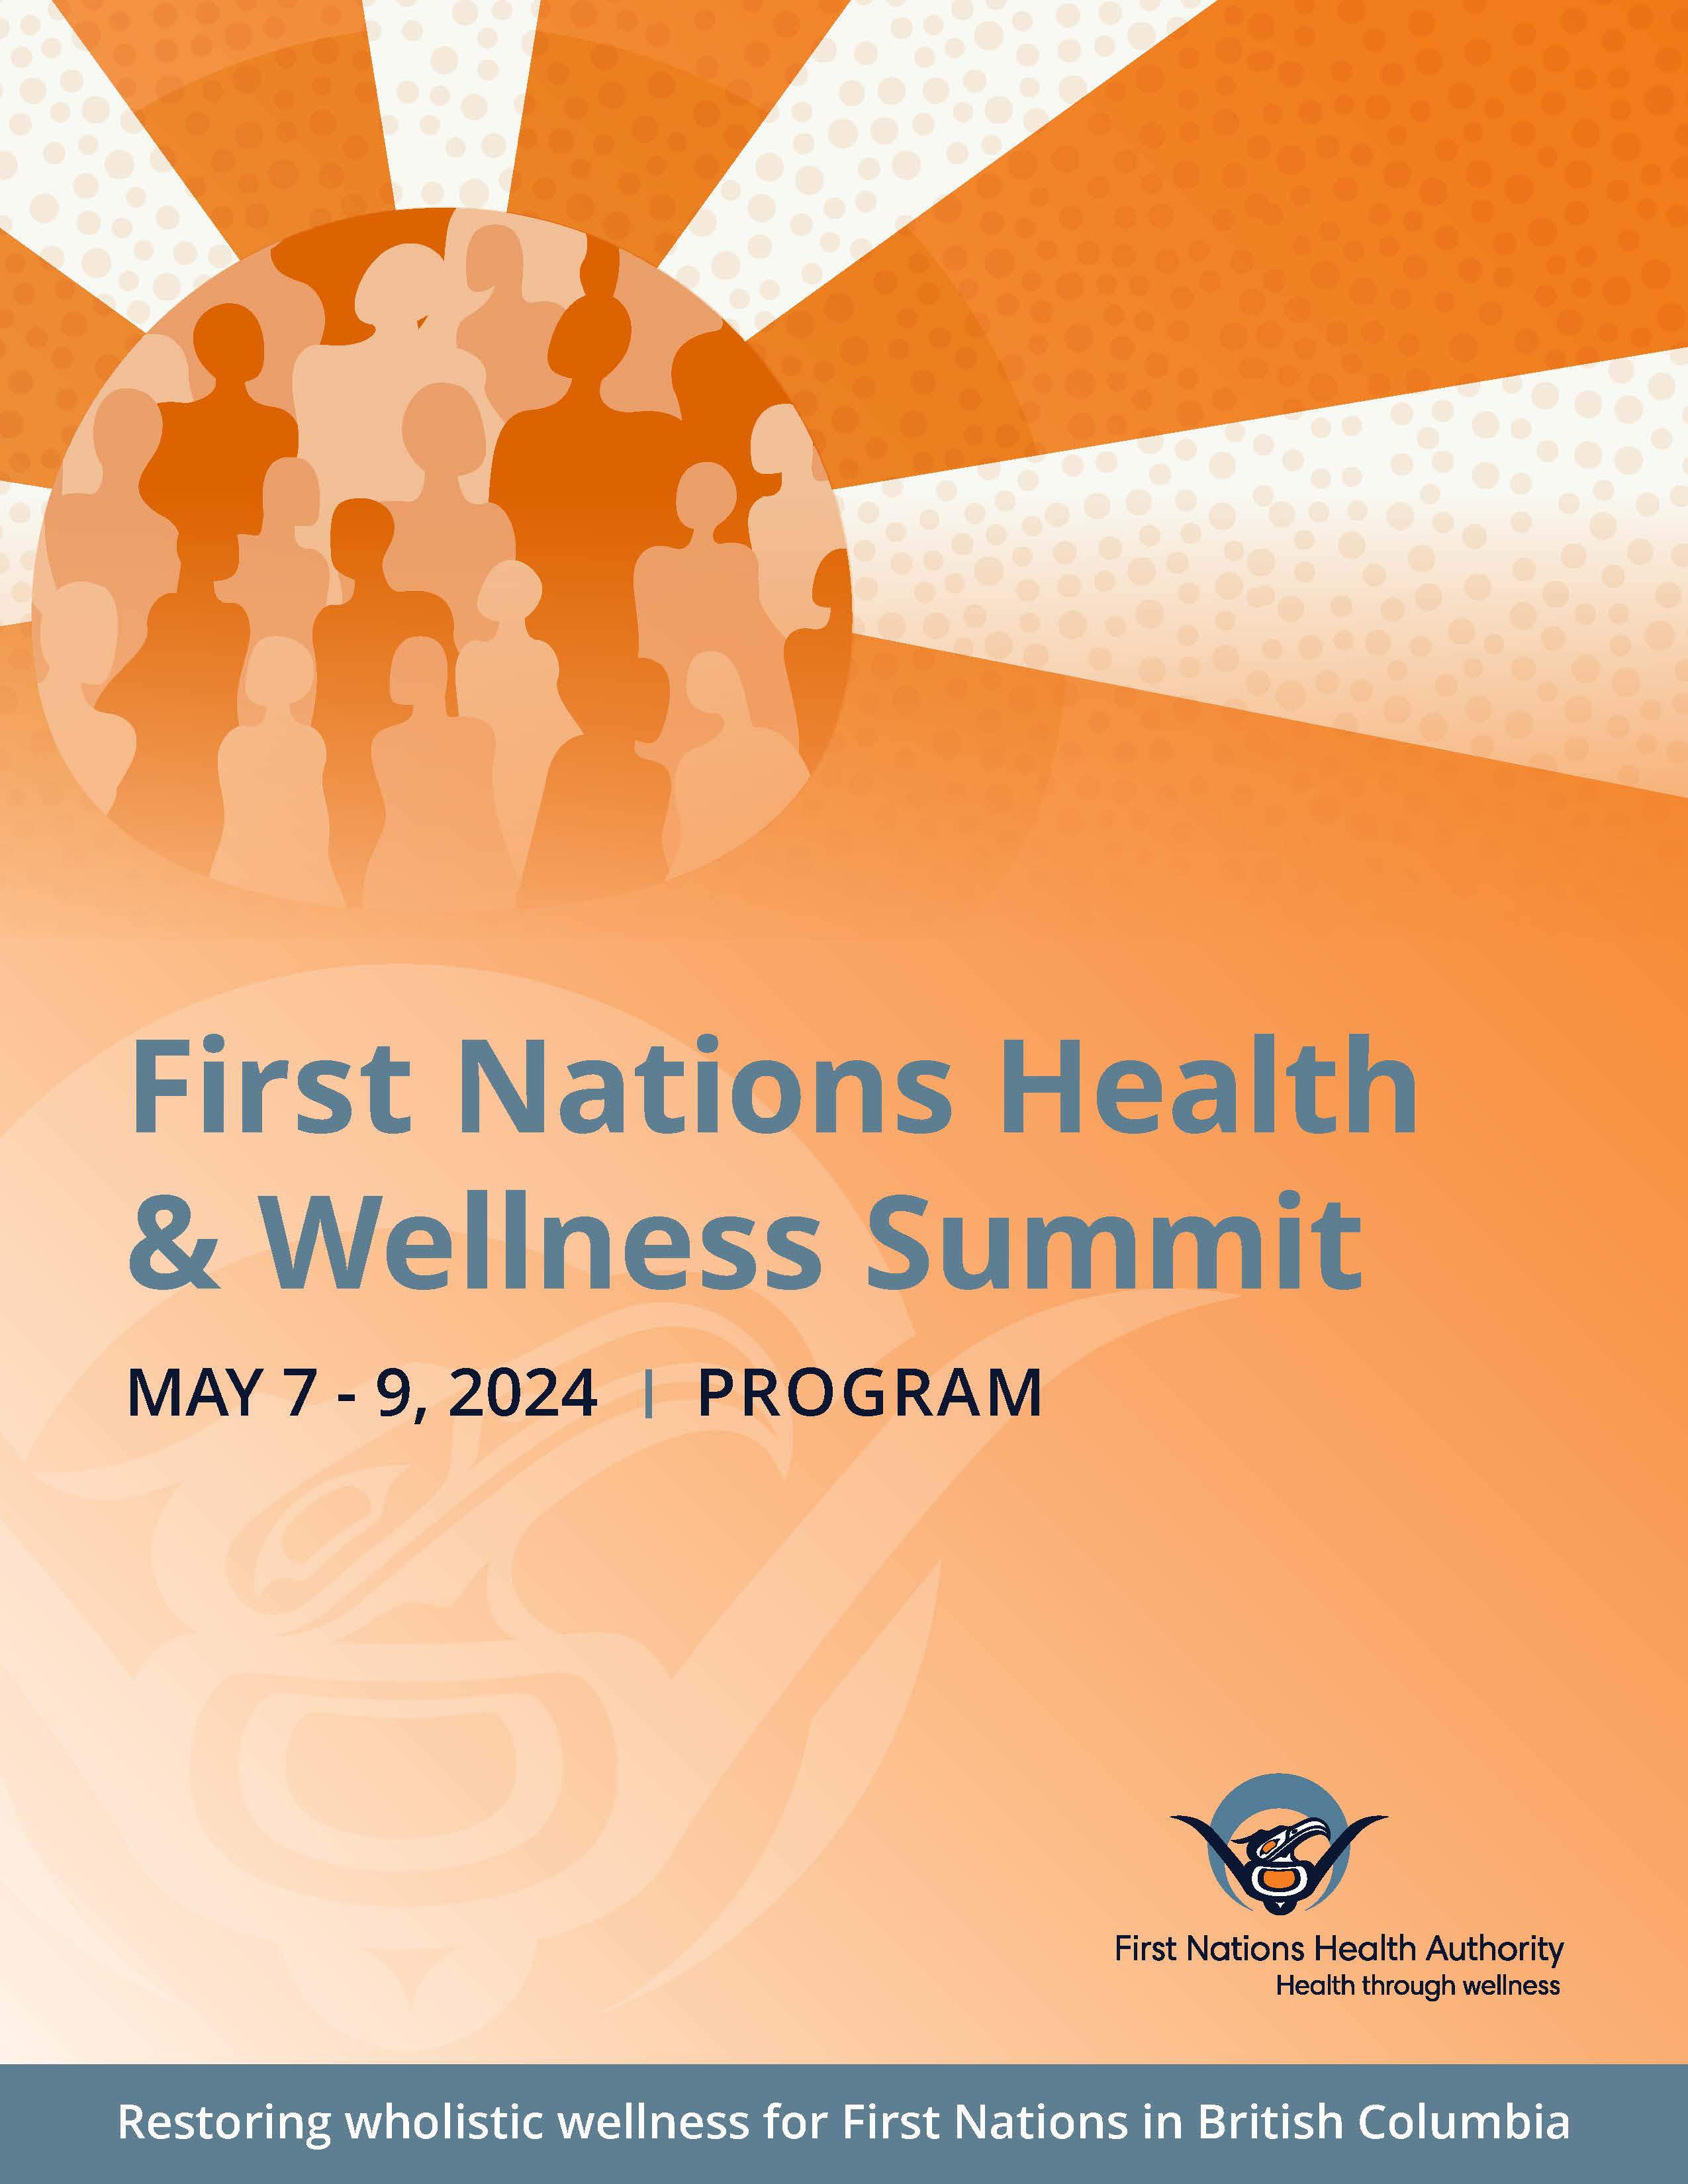 FNHA-Health-and-Wellness-Summit-Program-Thumbnail.jpg